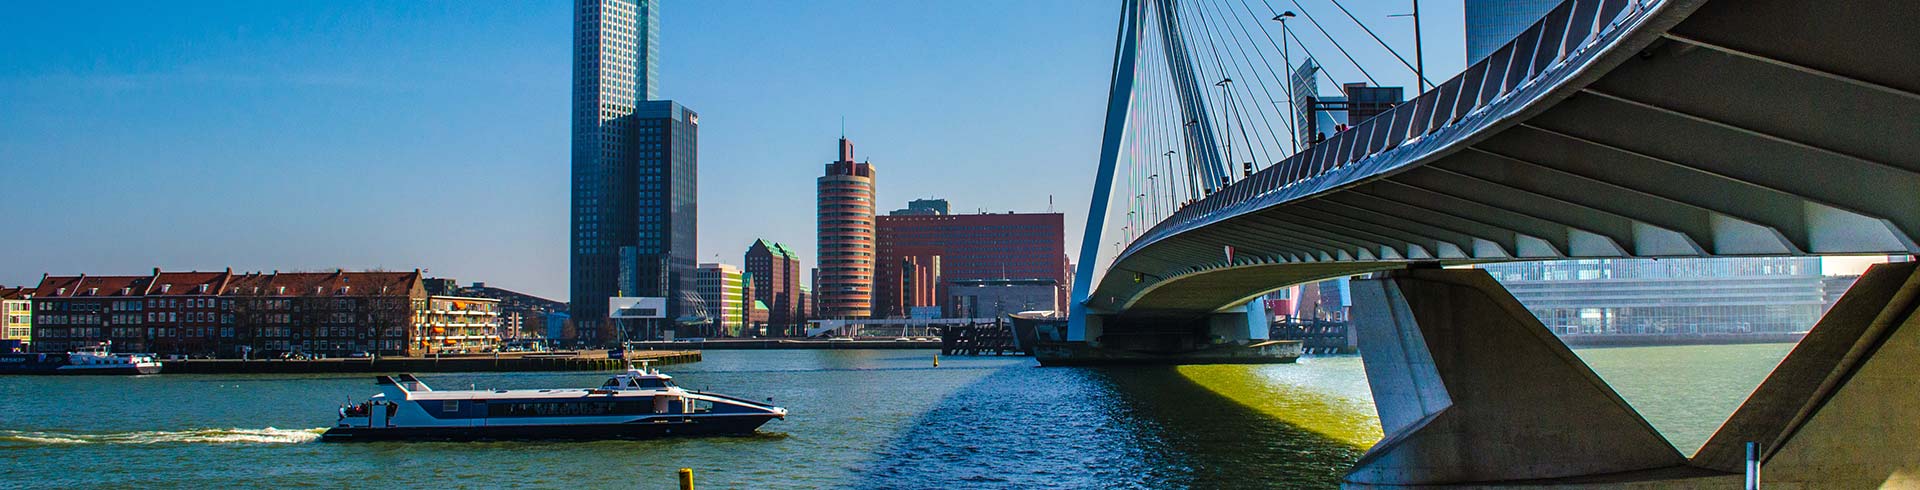 Pont de Rotterdam